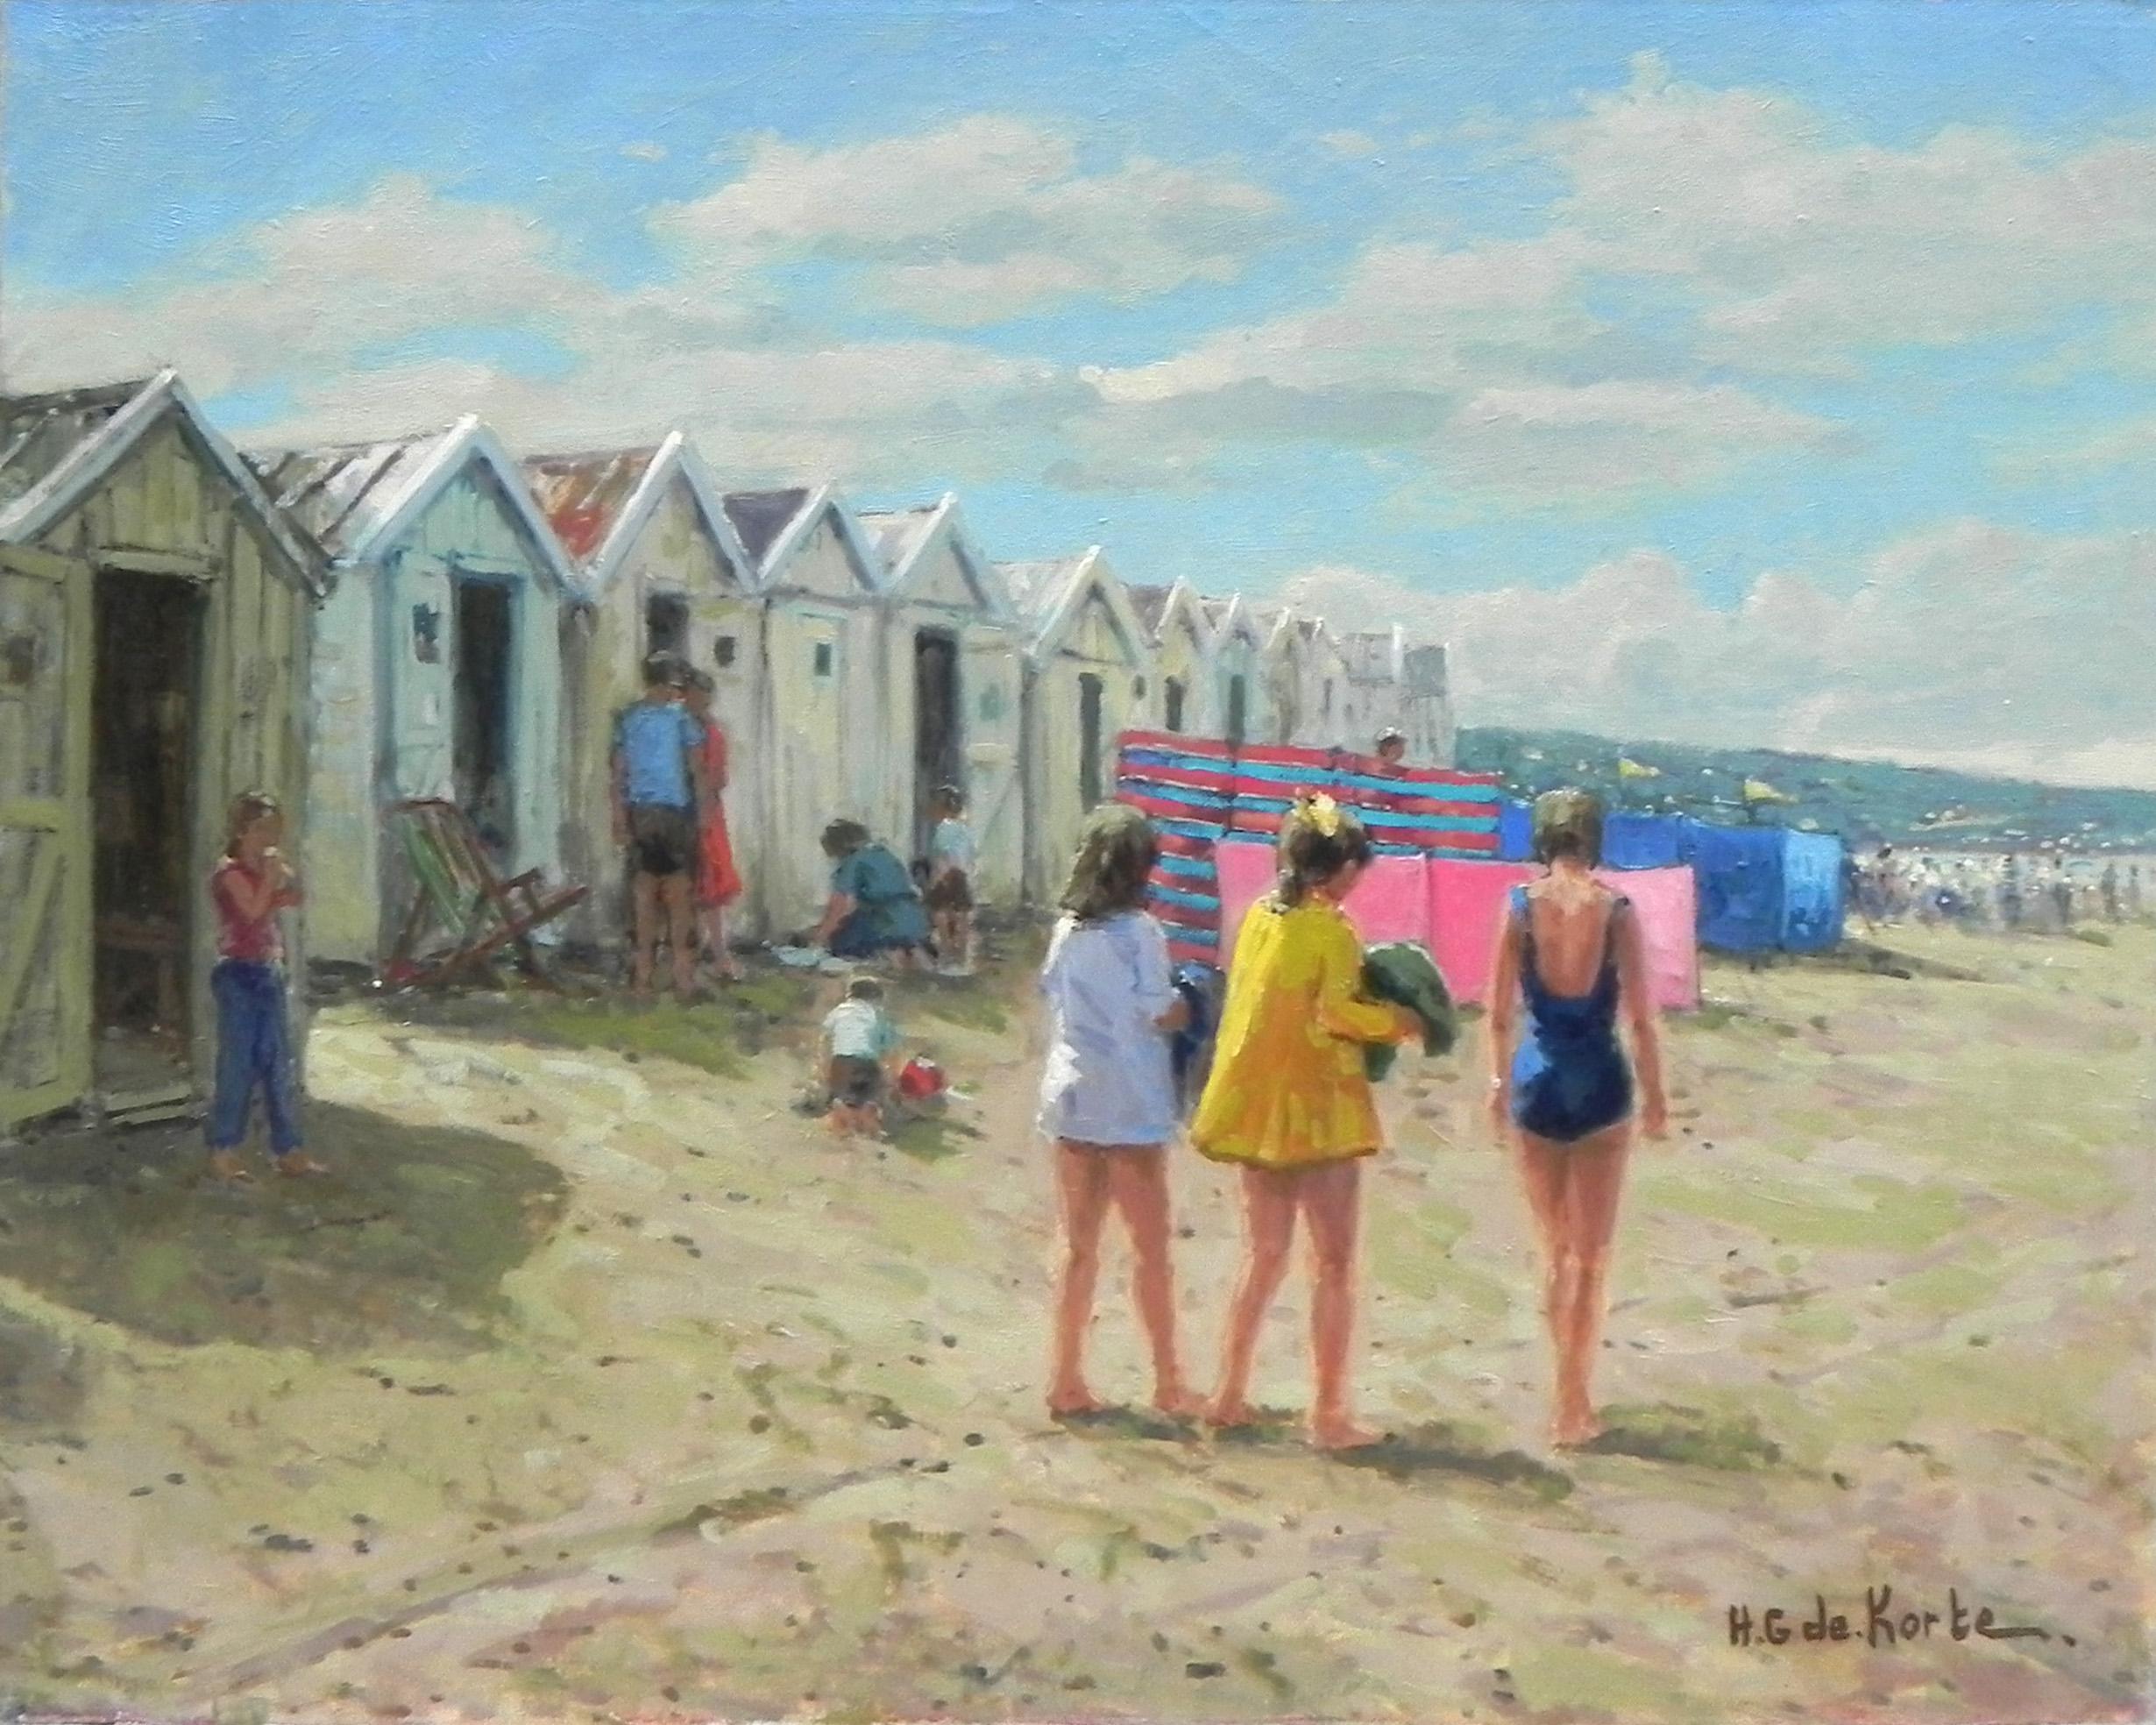 "The Beach", Henni de Korte, 20x24 in, Oil on Canvas, Classical Impressionism